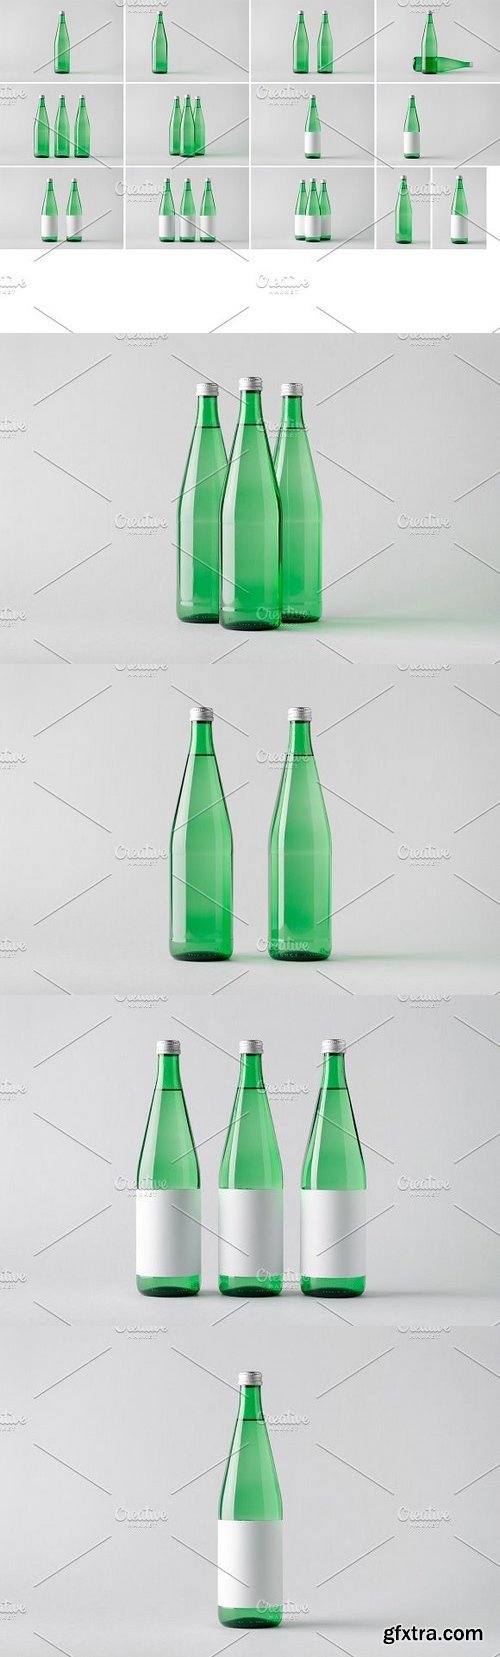 CM - Water Bottle Mock-Up Photo Bundle 2 1326999